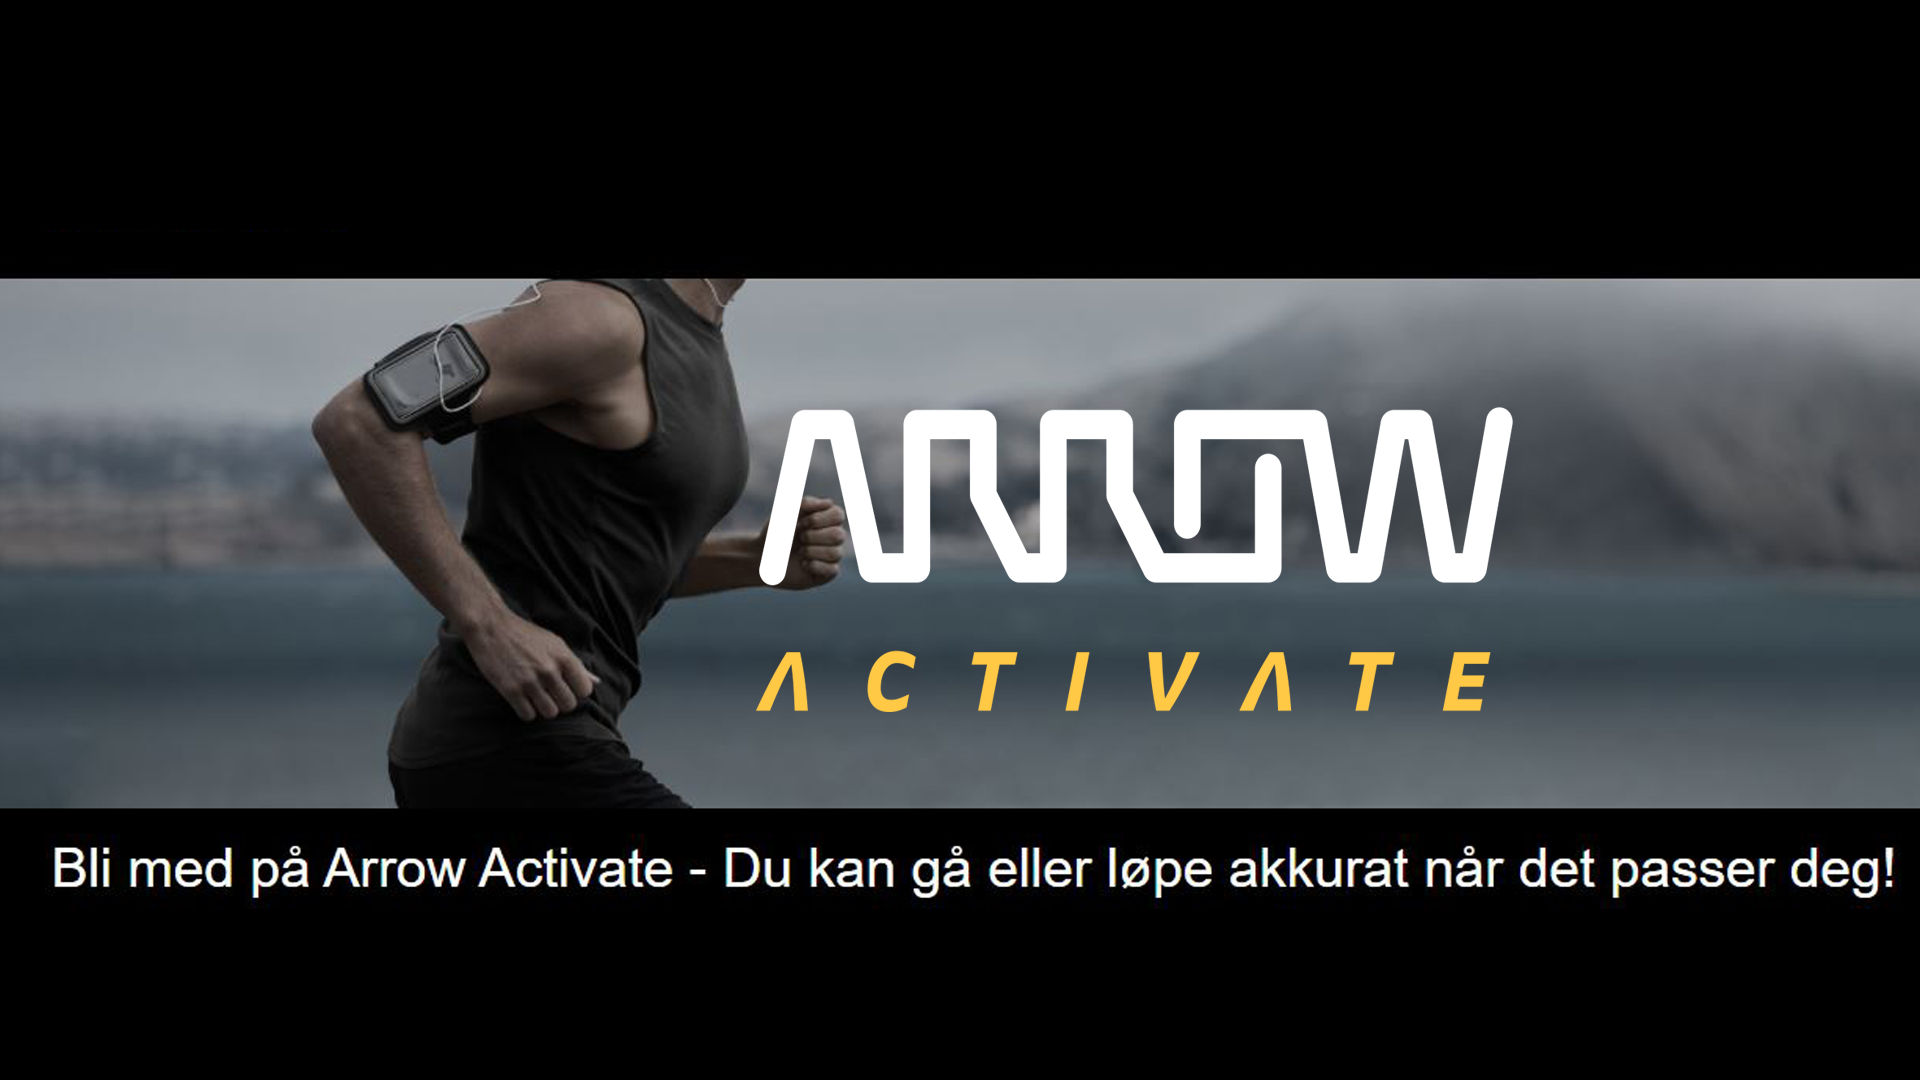 Arrow Activate Norway - Konkurranse #2